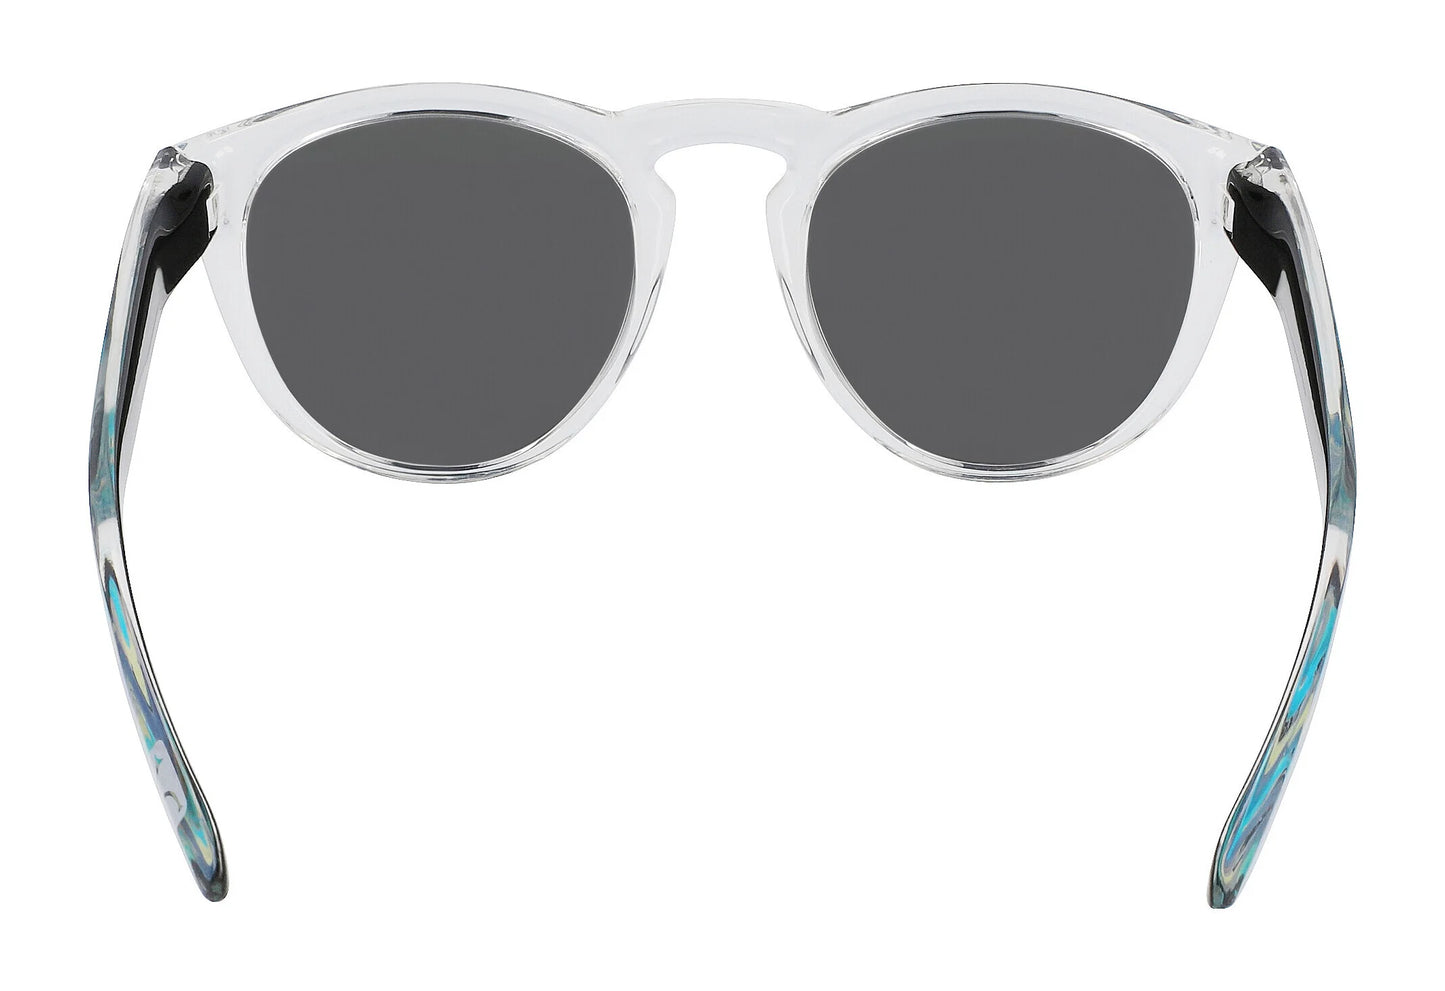 Dragon OPUS Sunglasses | Size 51